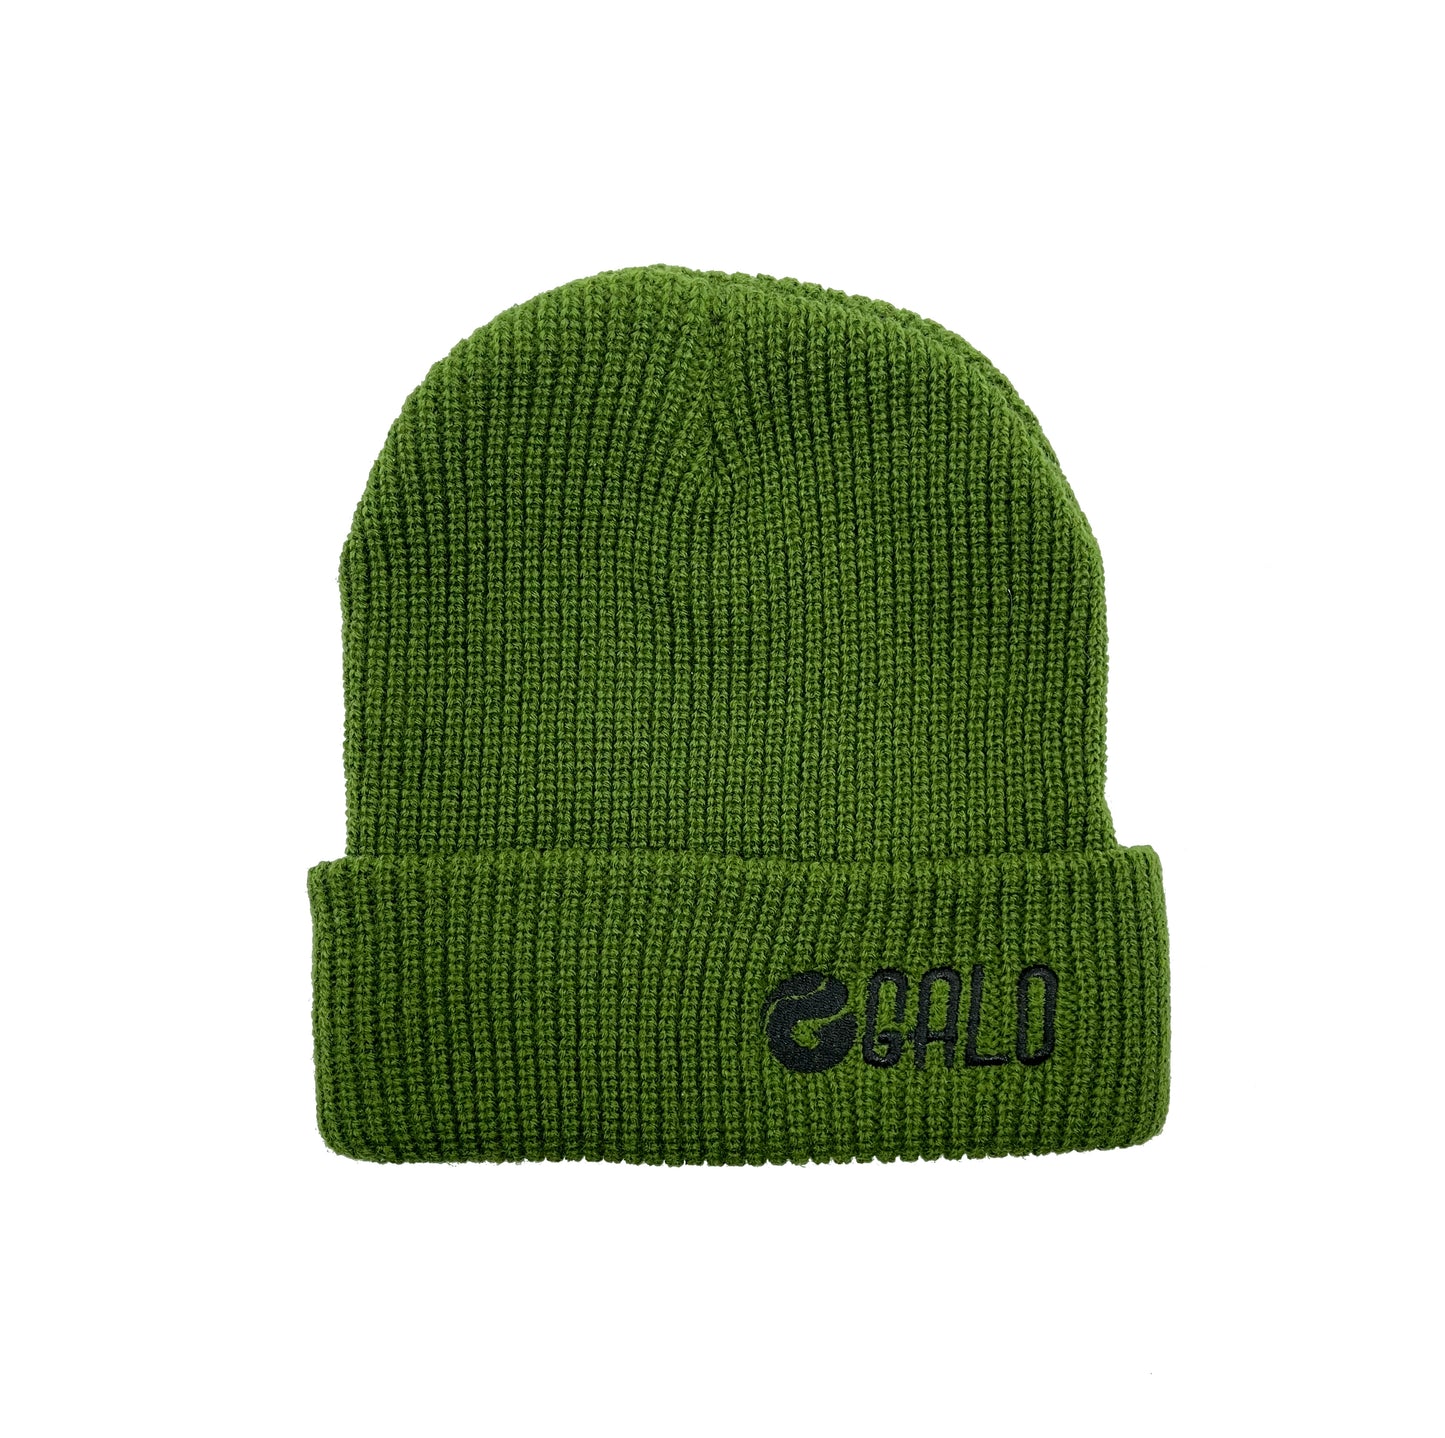 Galo Hat - Green Wool